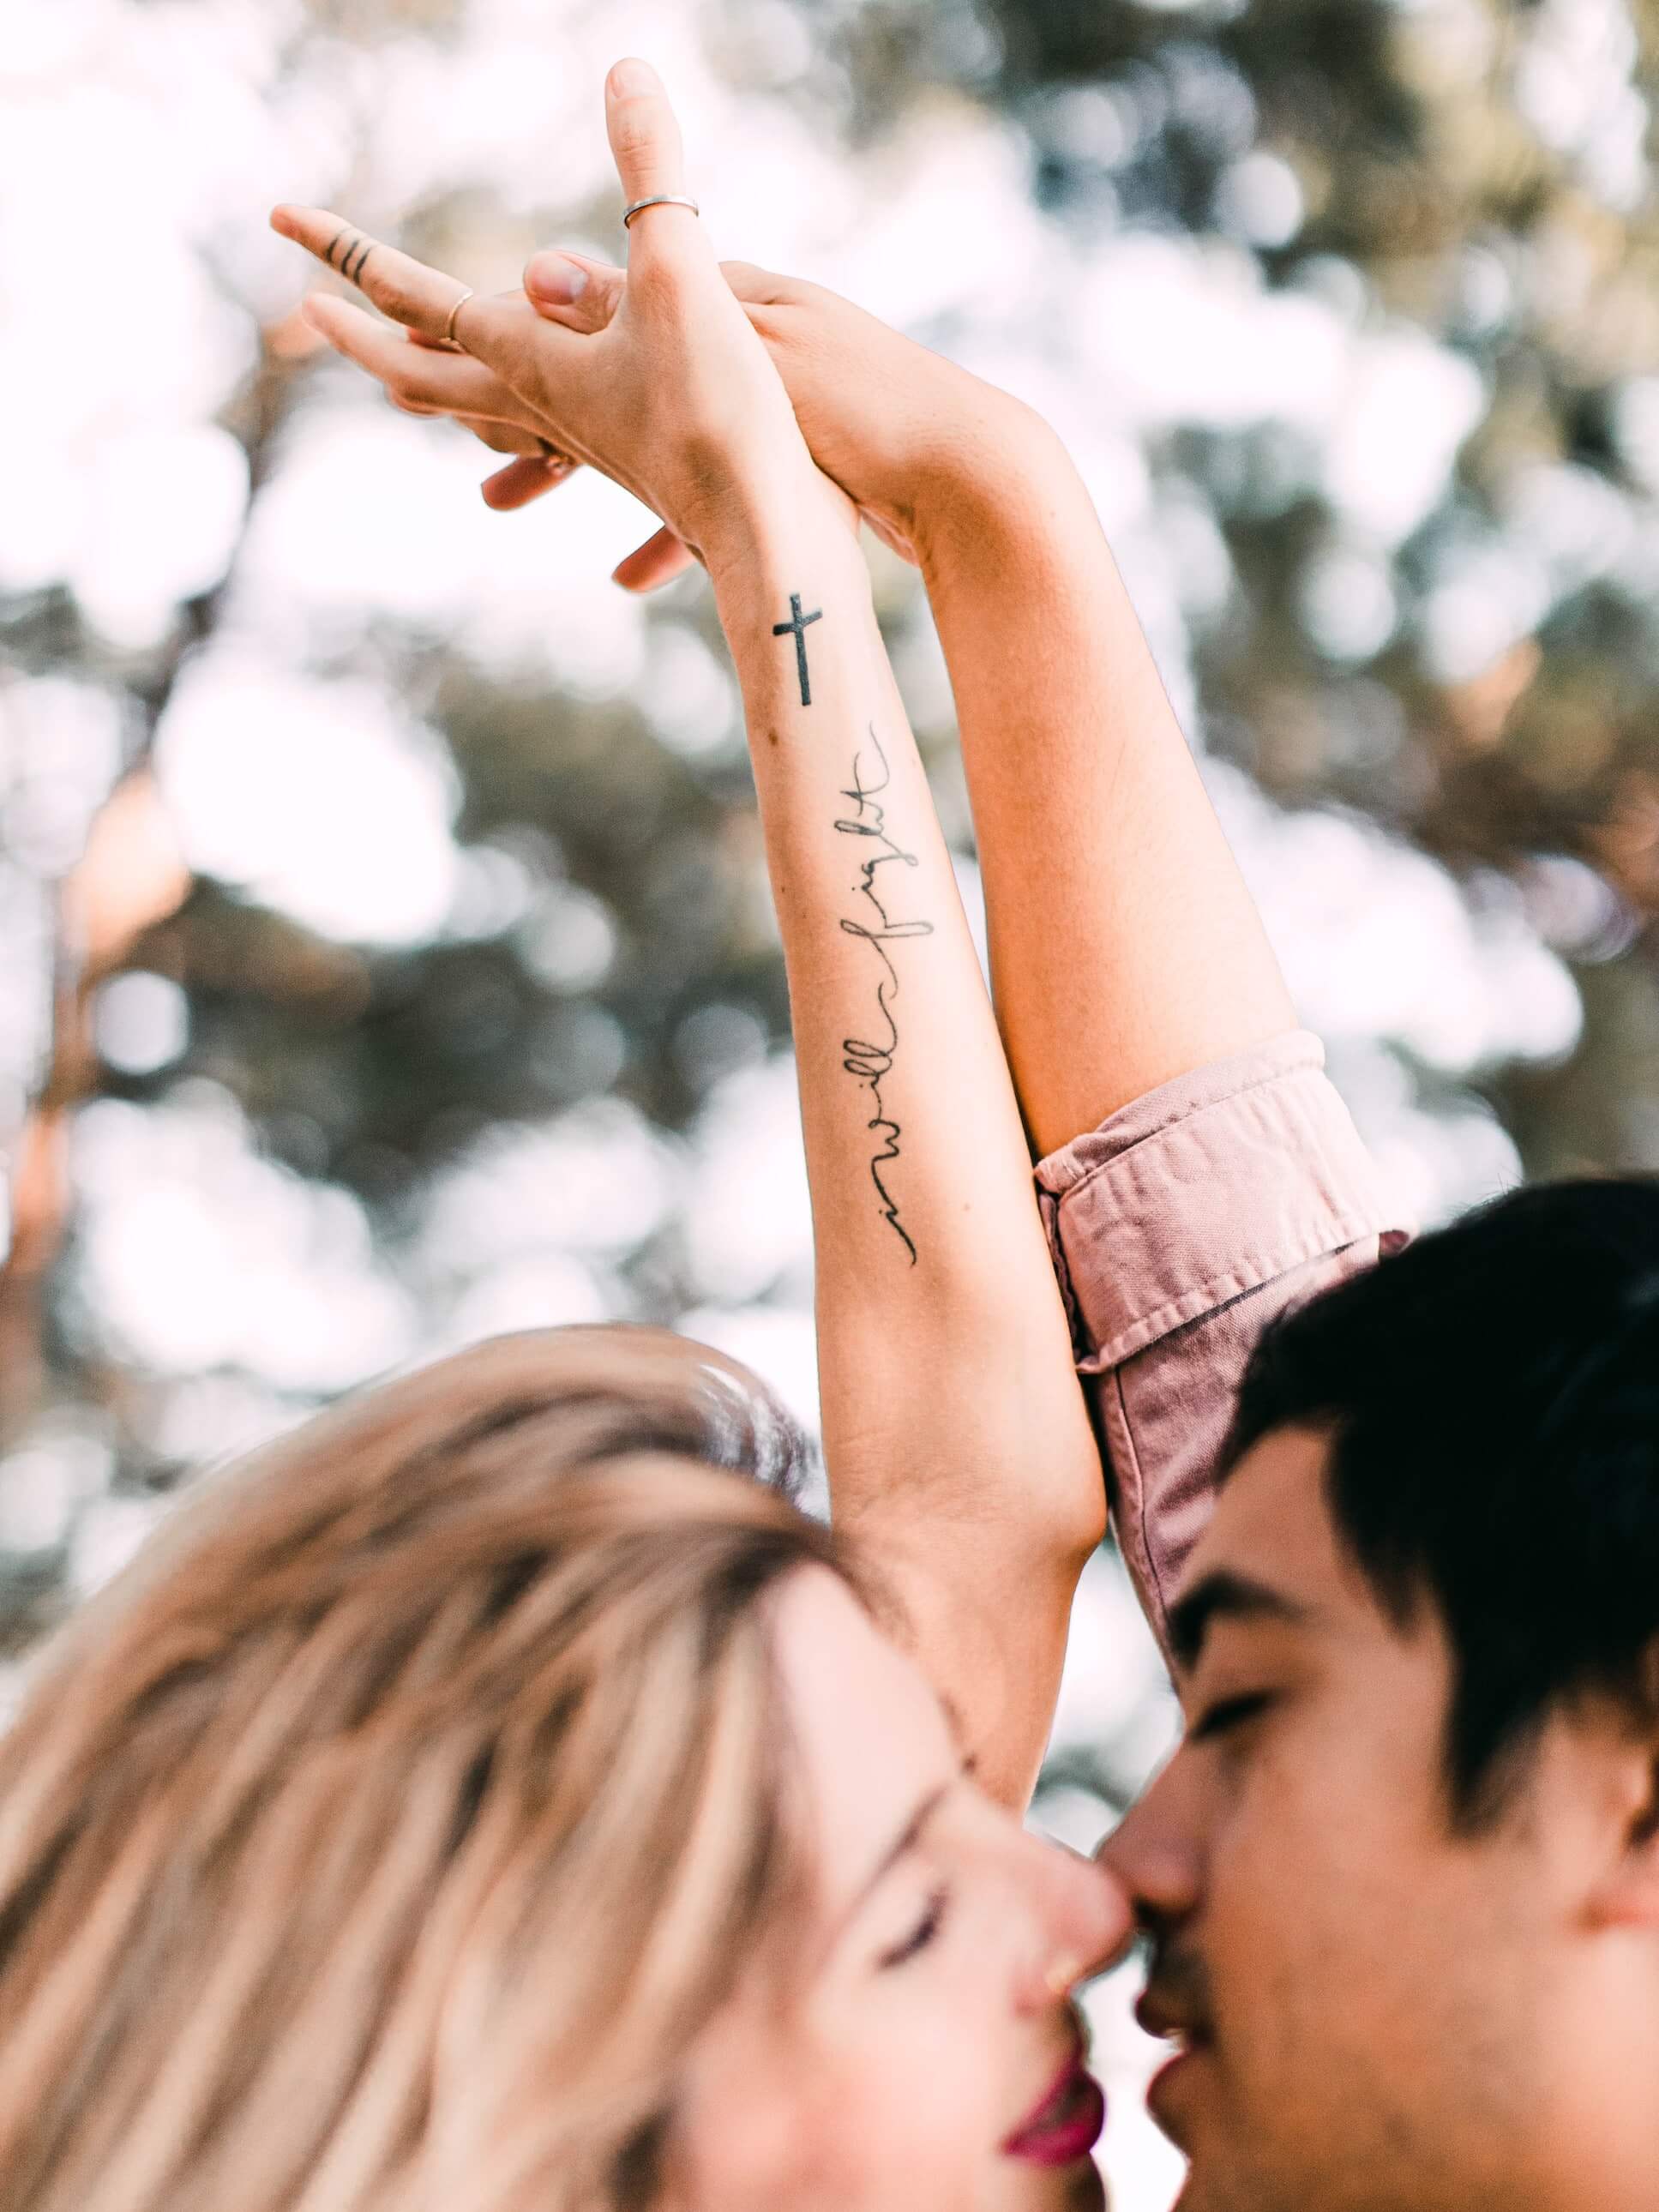 name tattoo on woman's forearm